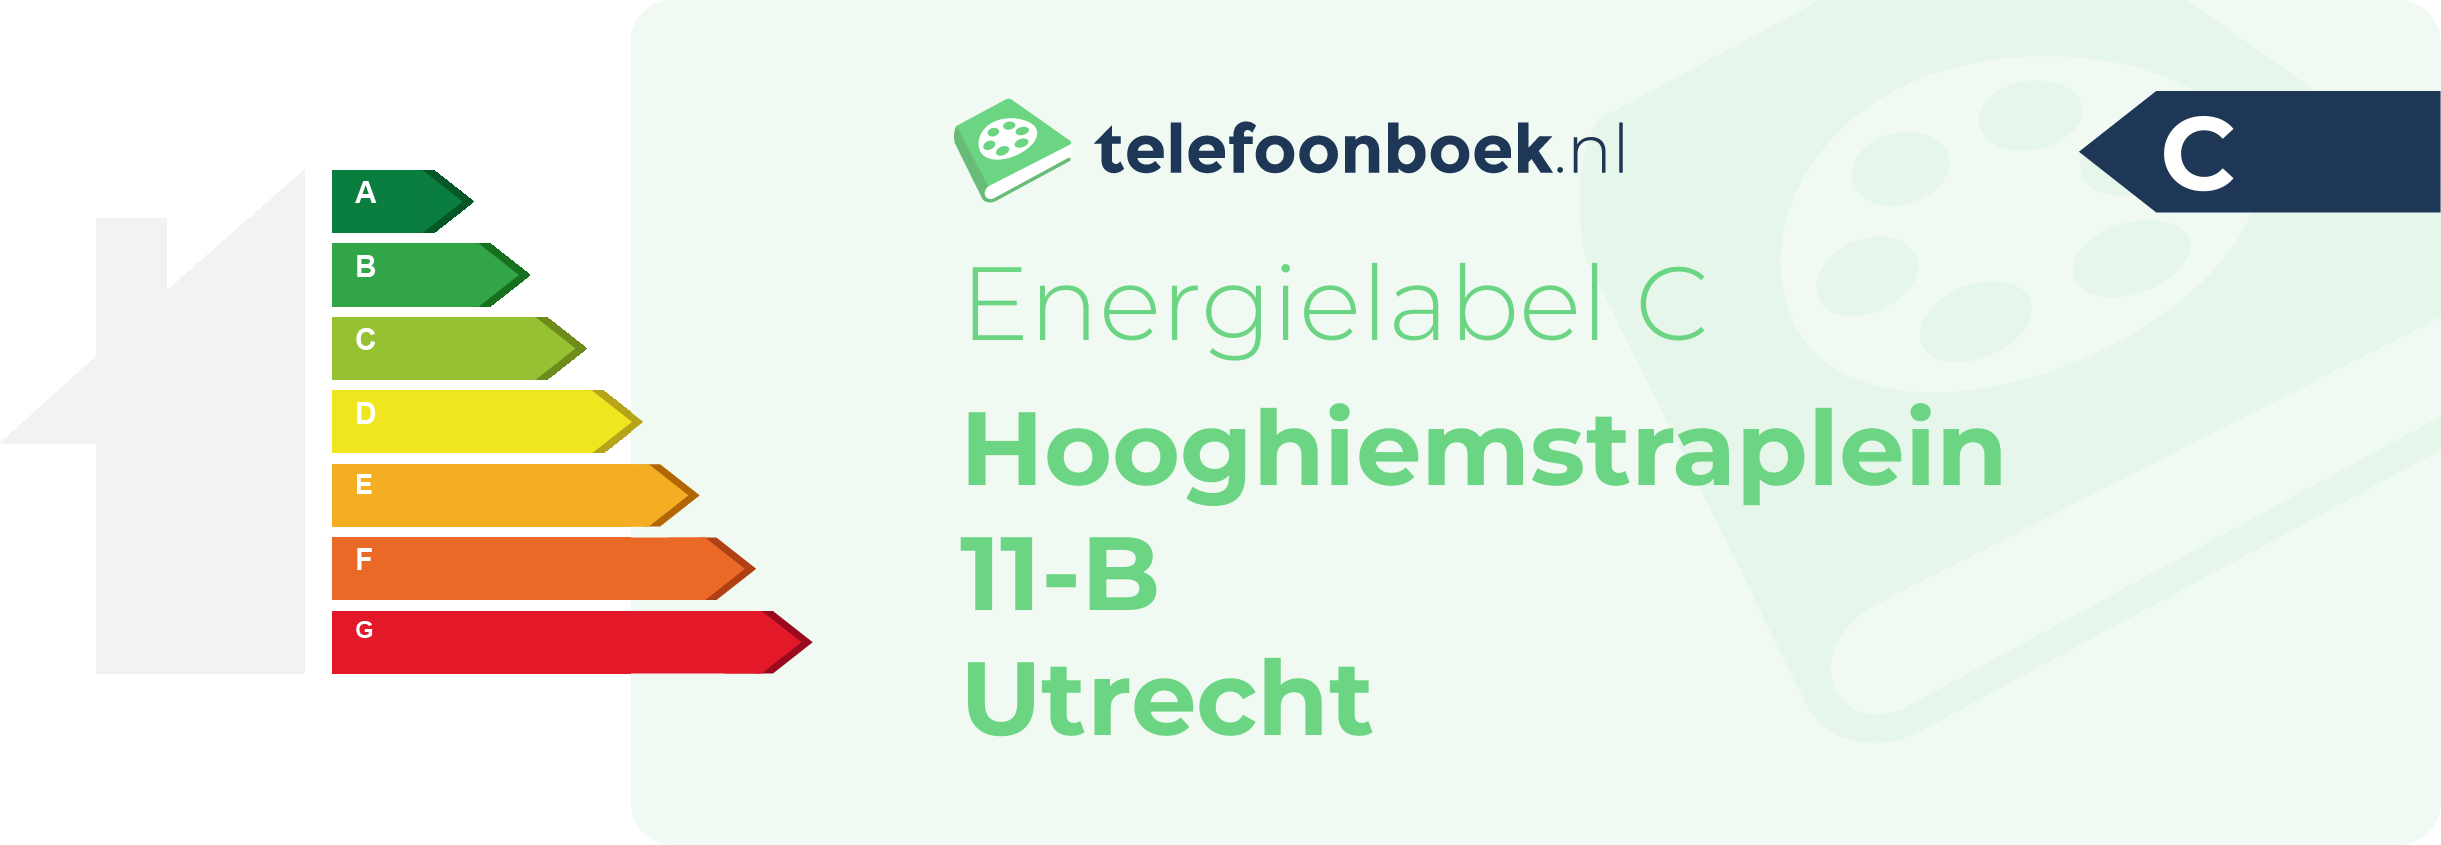 Energielabel Hooghiemstraplein 11-B Utrecht